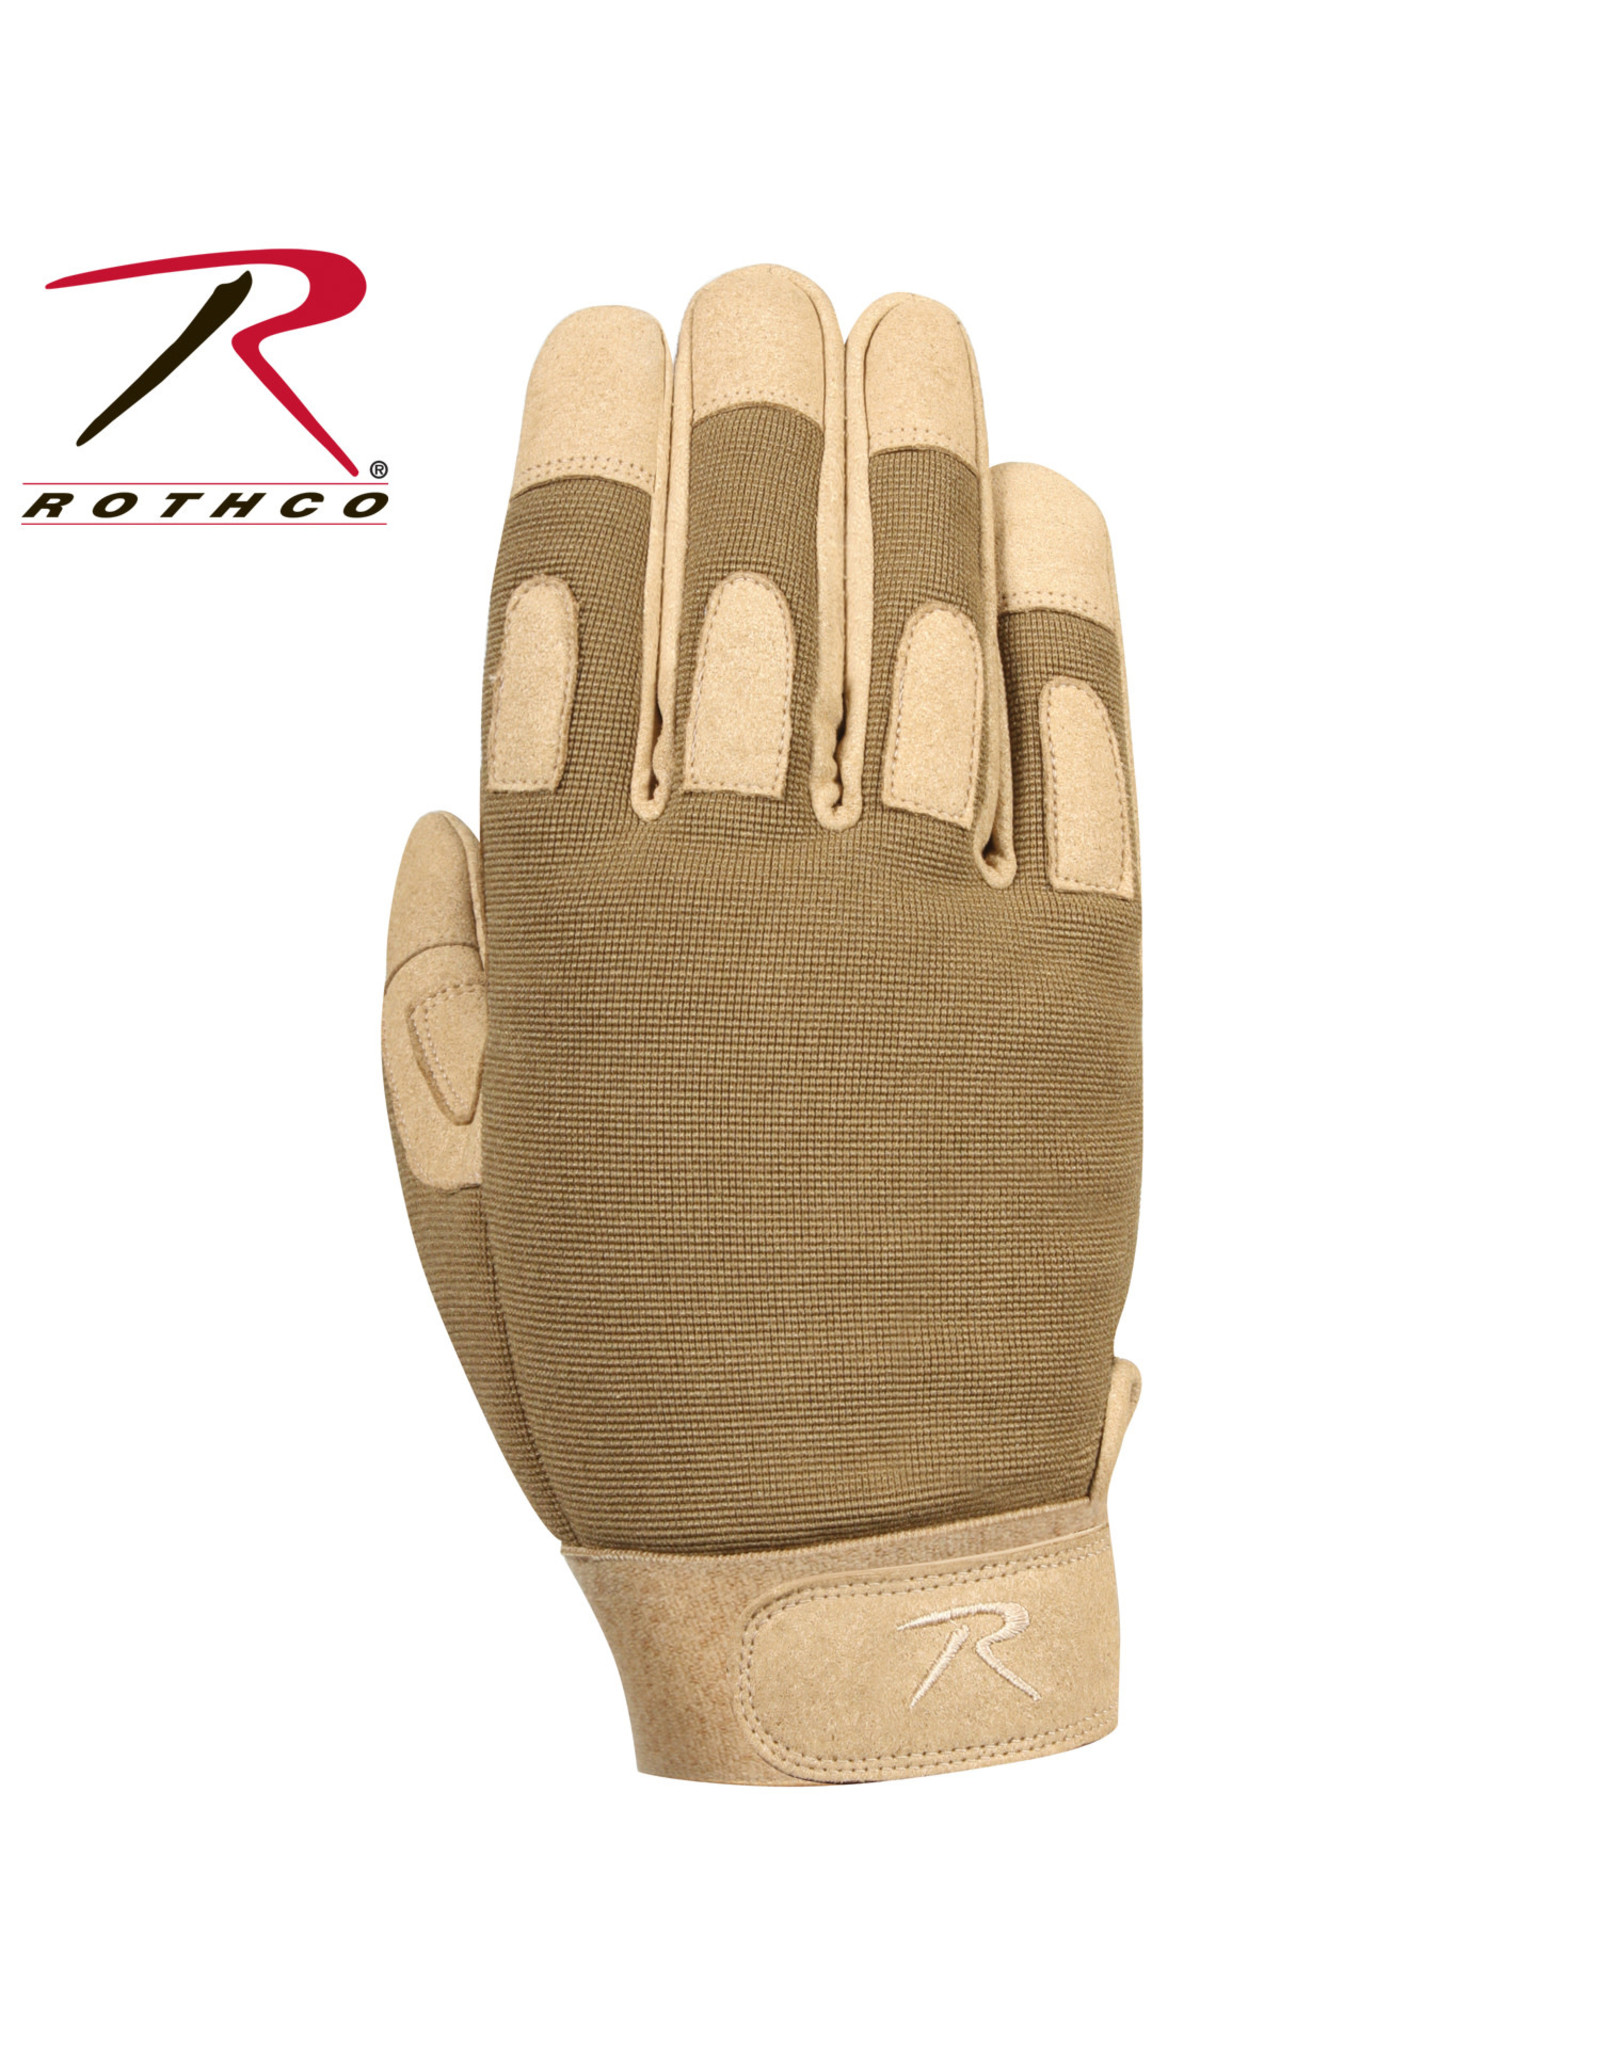 Rothco All Purpose Duty Glove